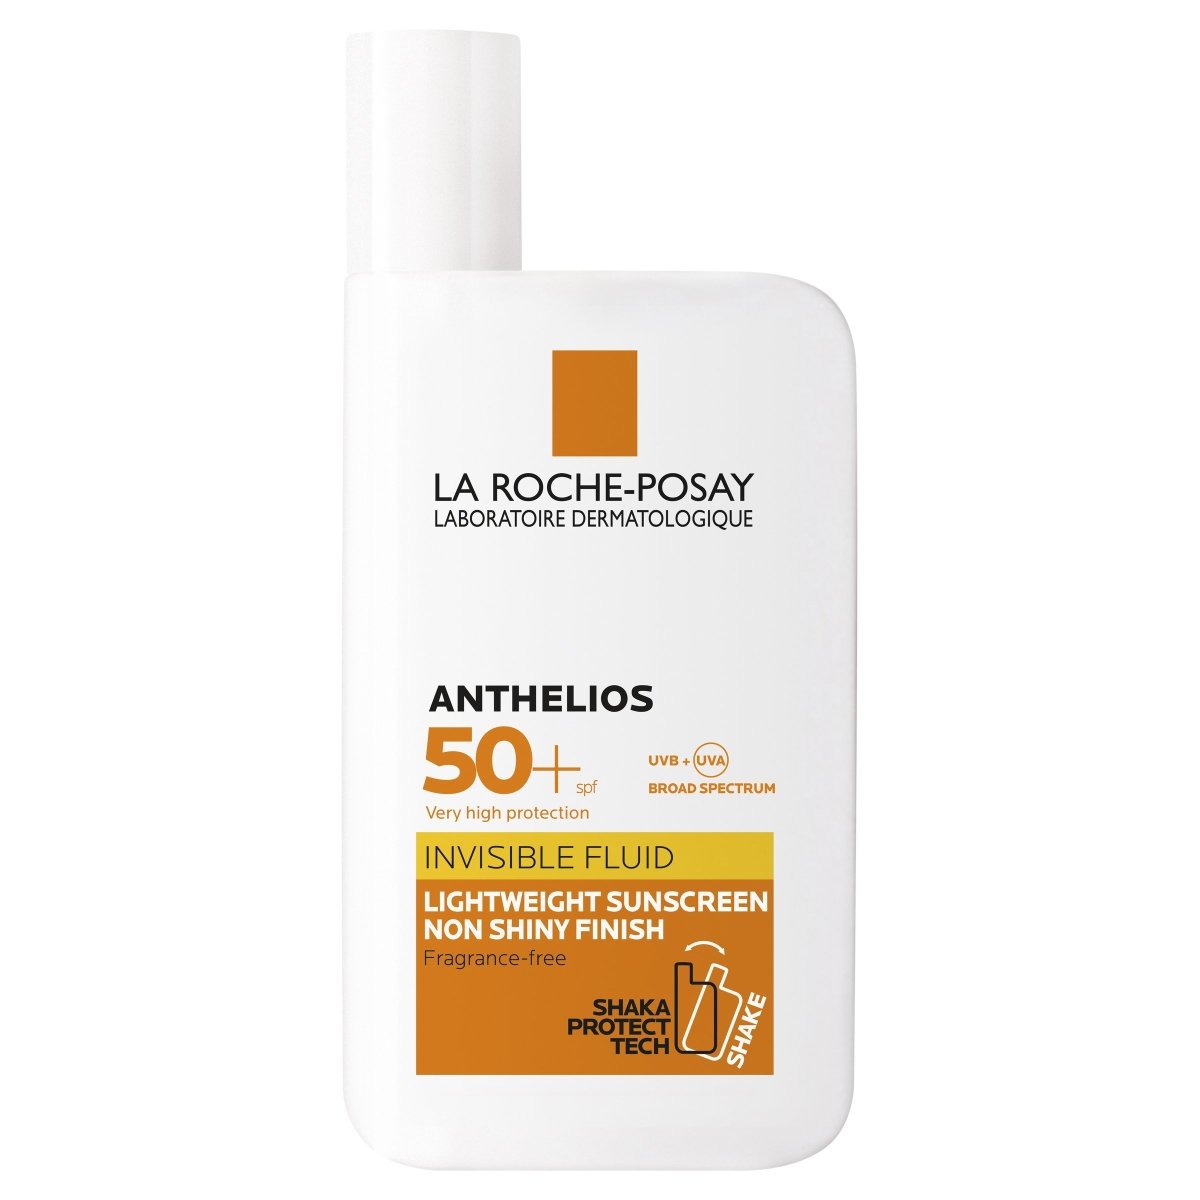 La Roche-Posay Anthelios Invisible Fluid Facial Sunscreen SPF 50+ 50mL - Vital Pharmacy Supplies